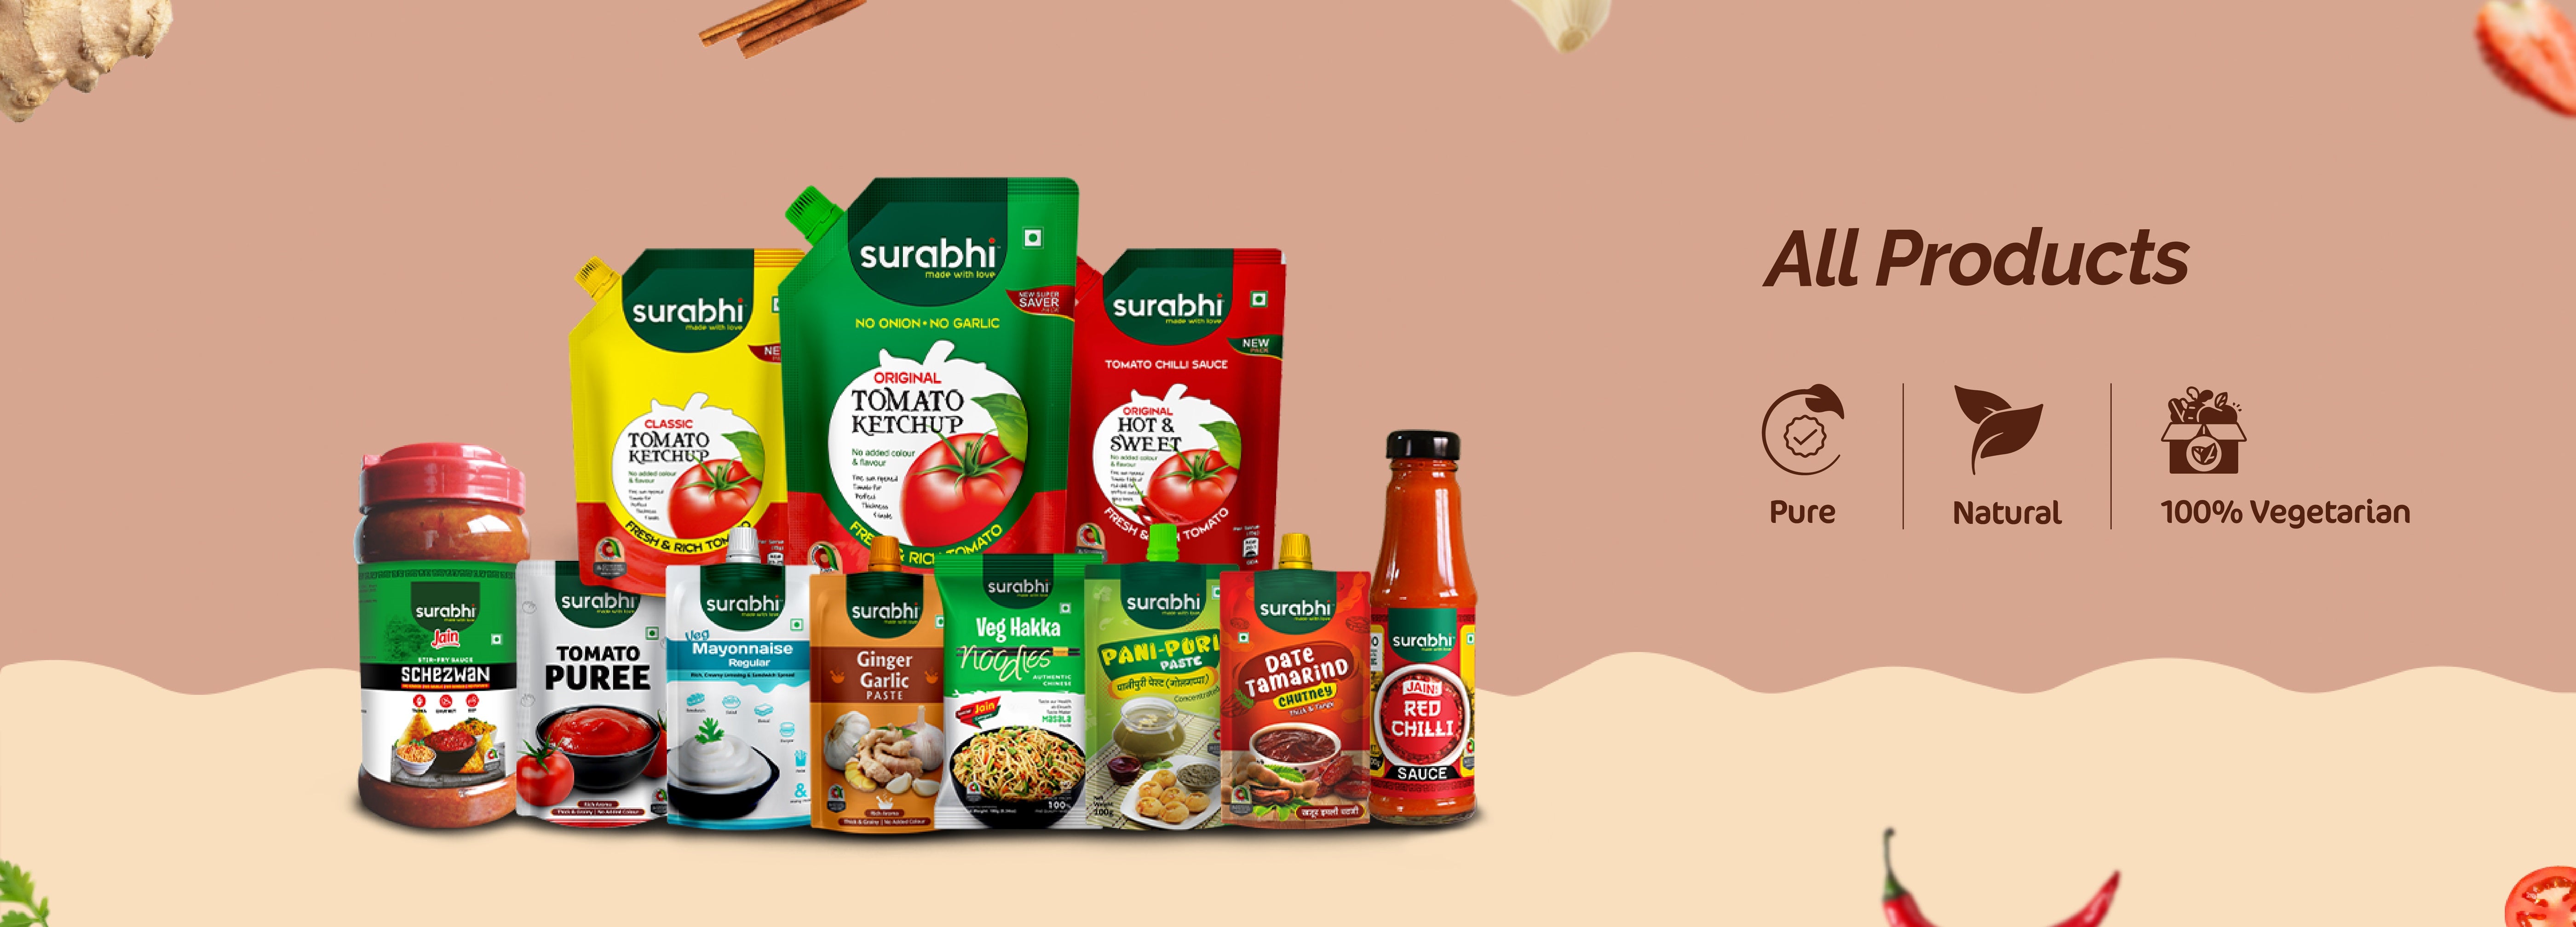 Surabhi Sauces all products range | Surabhi sauces